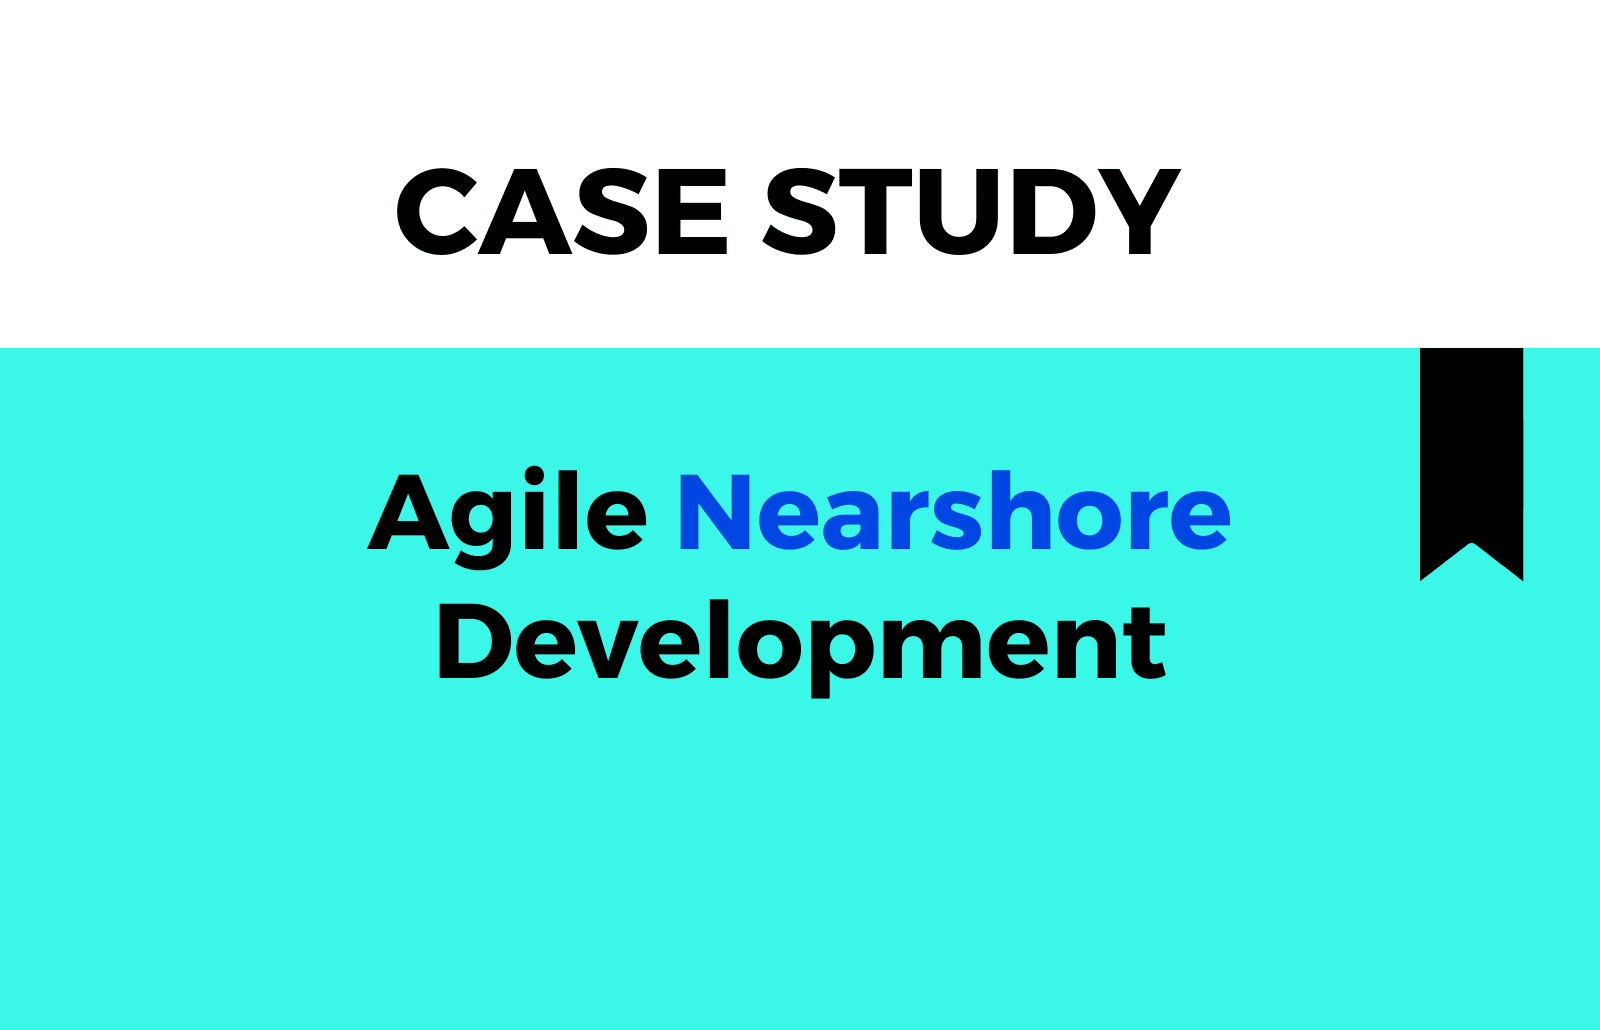 Agile nearshore development case study by Zartis